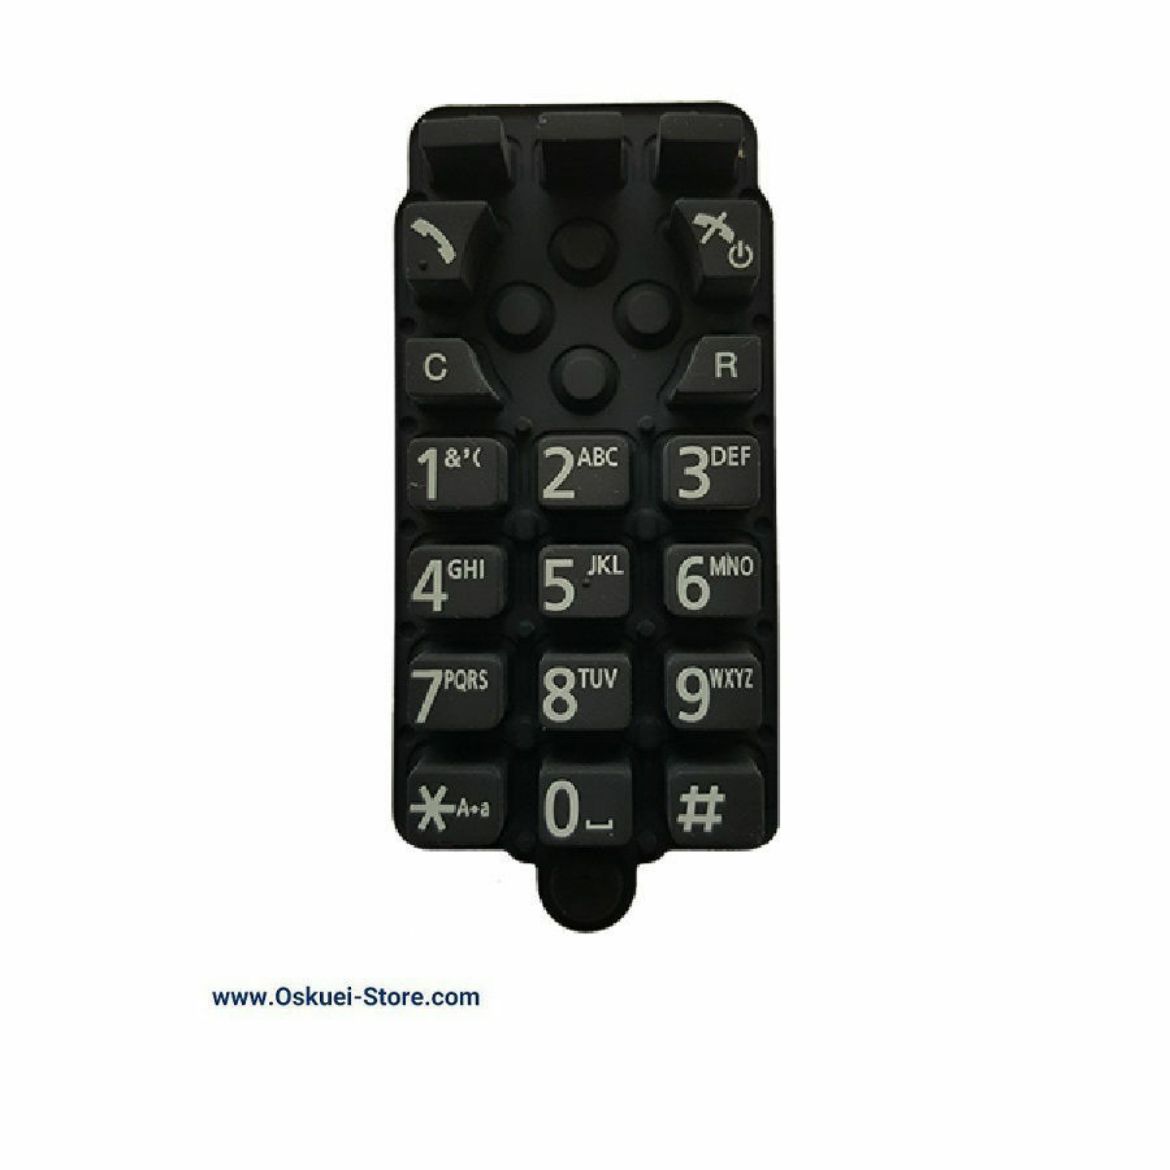 Panasonic Keypad For Panasonic KX-TG1711 Model Numbers